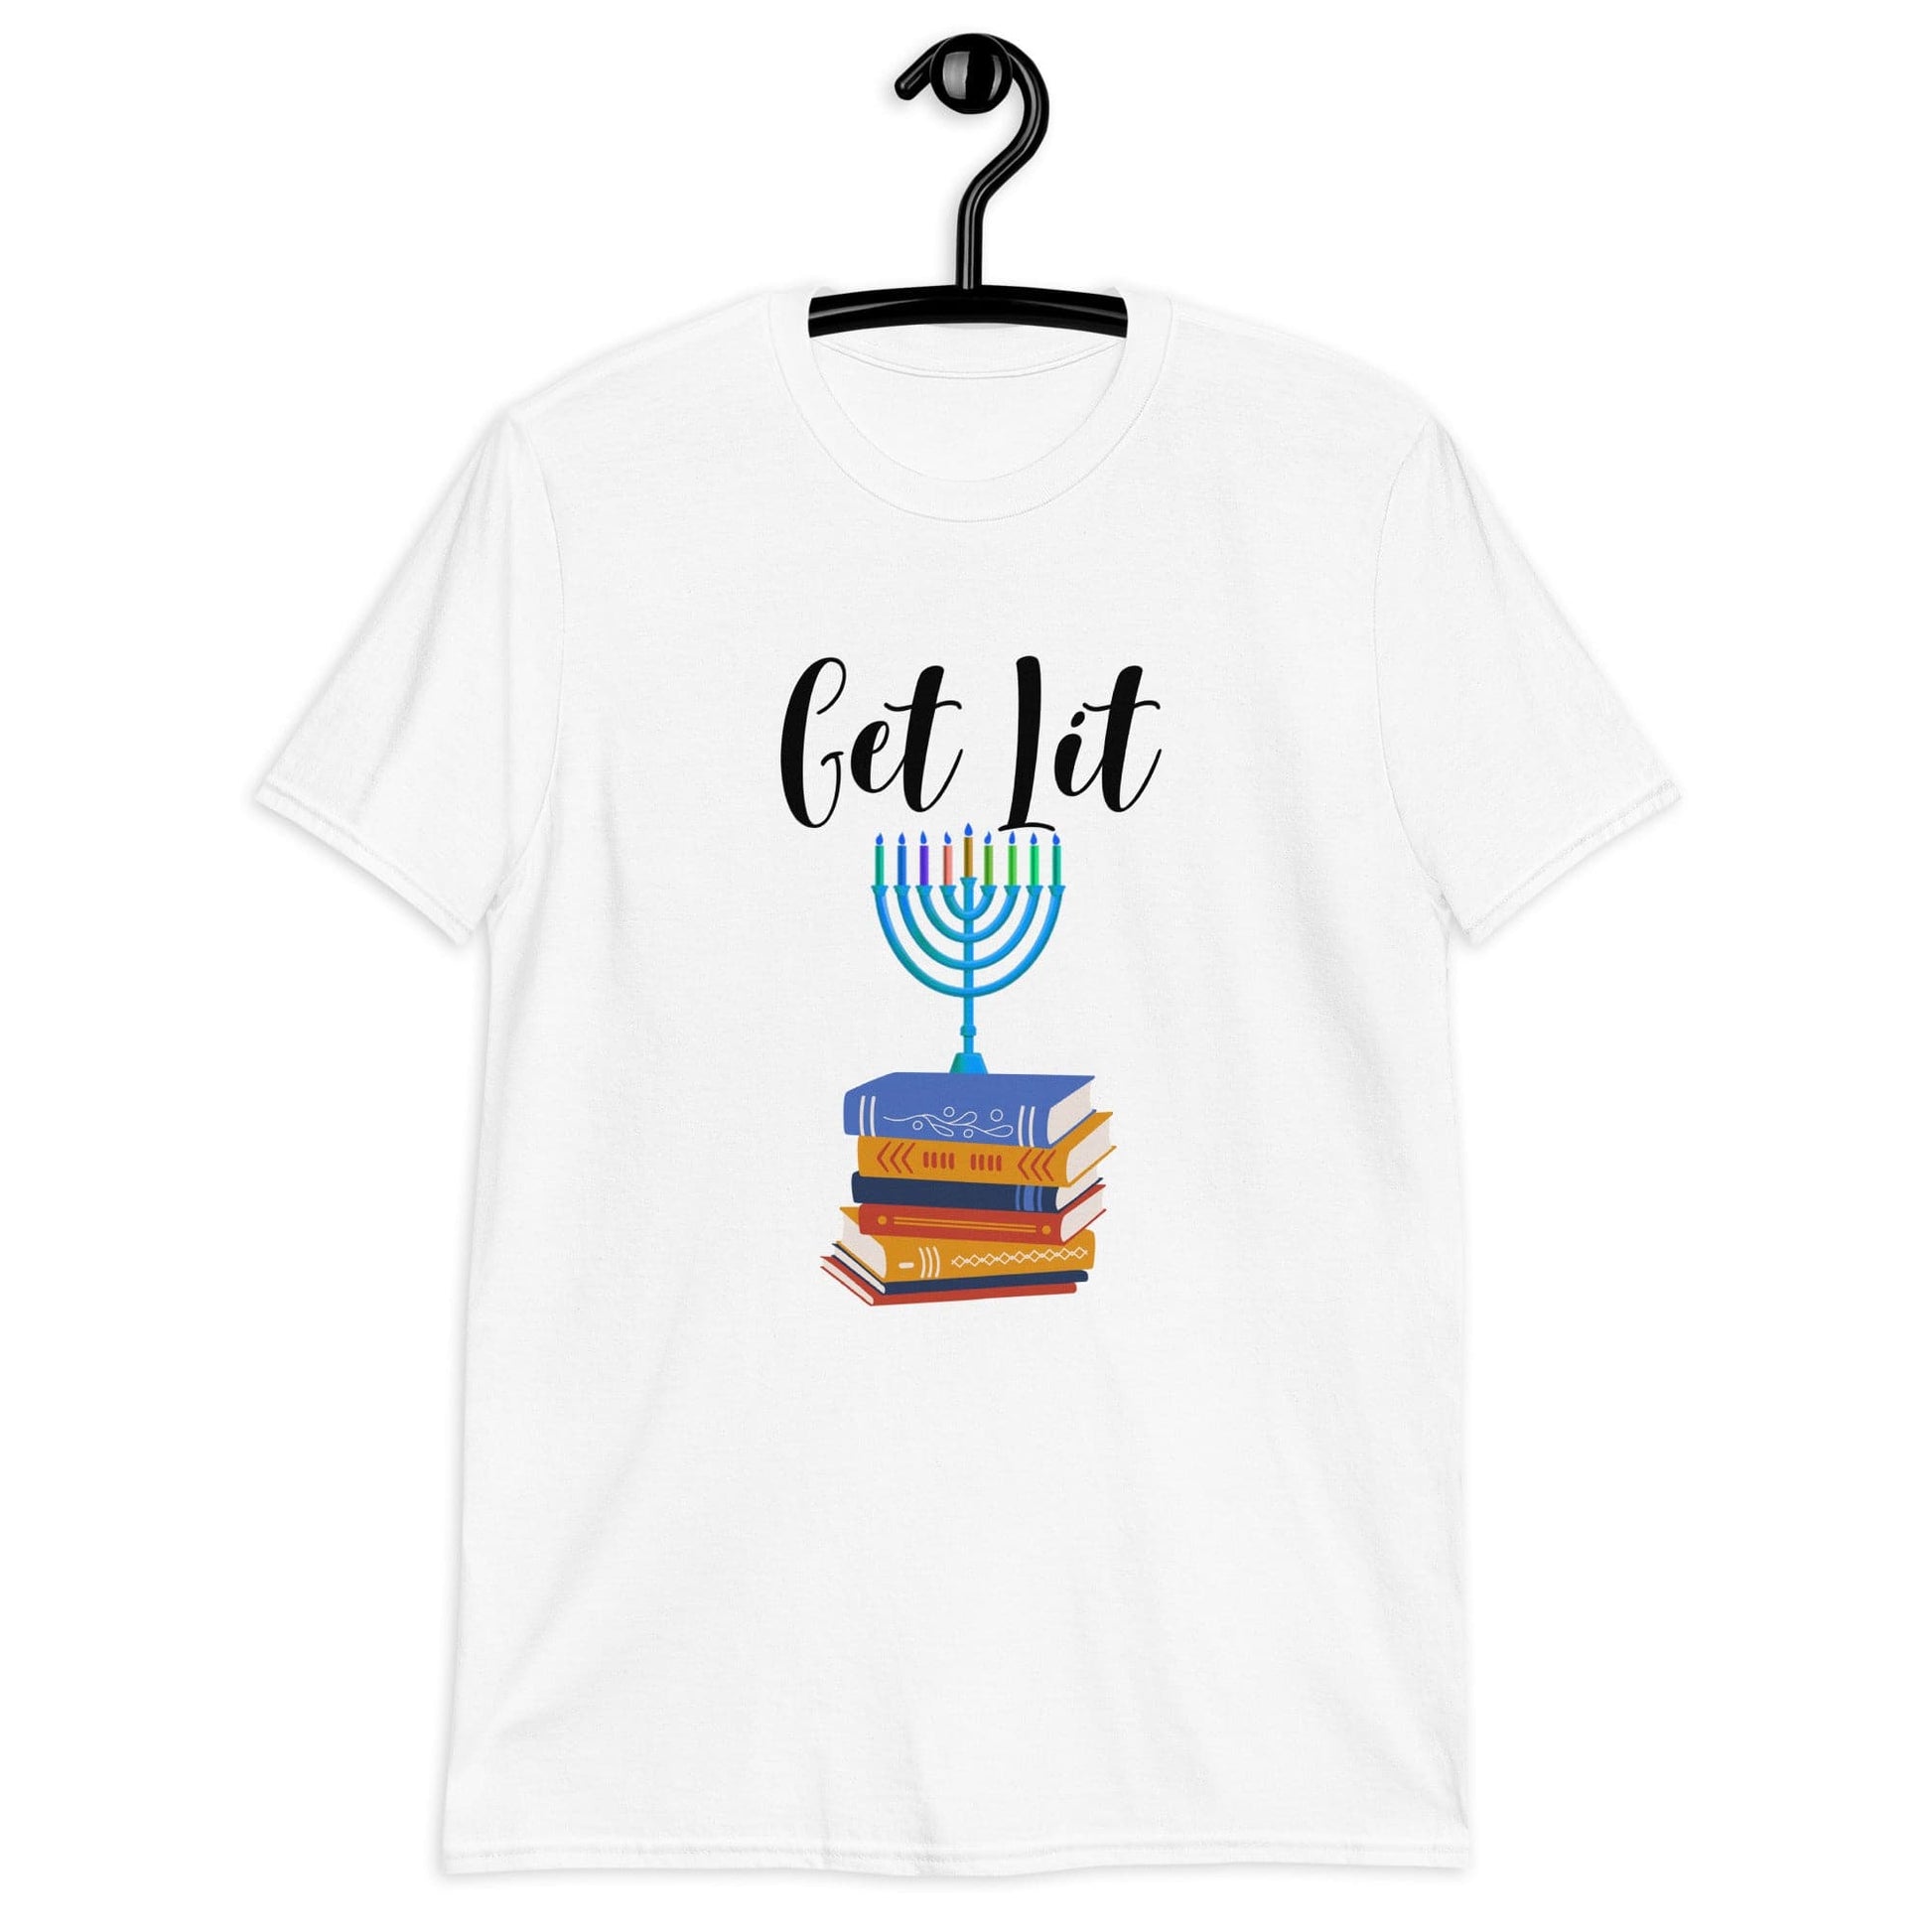 Get Lit Hanukkah T-Shirts - Kindle Crack